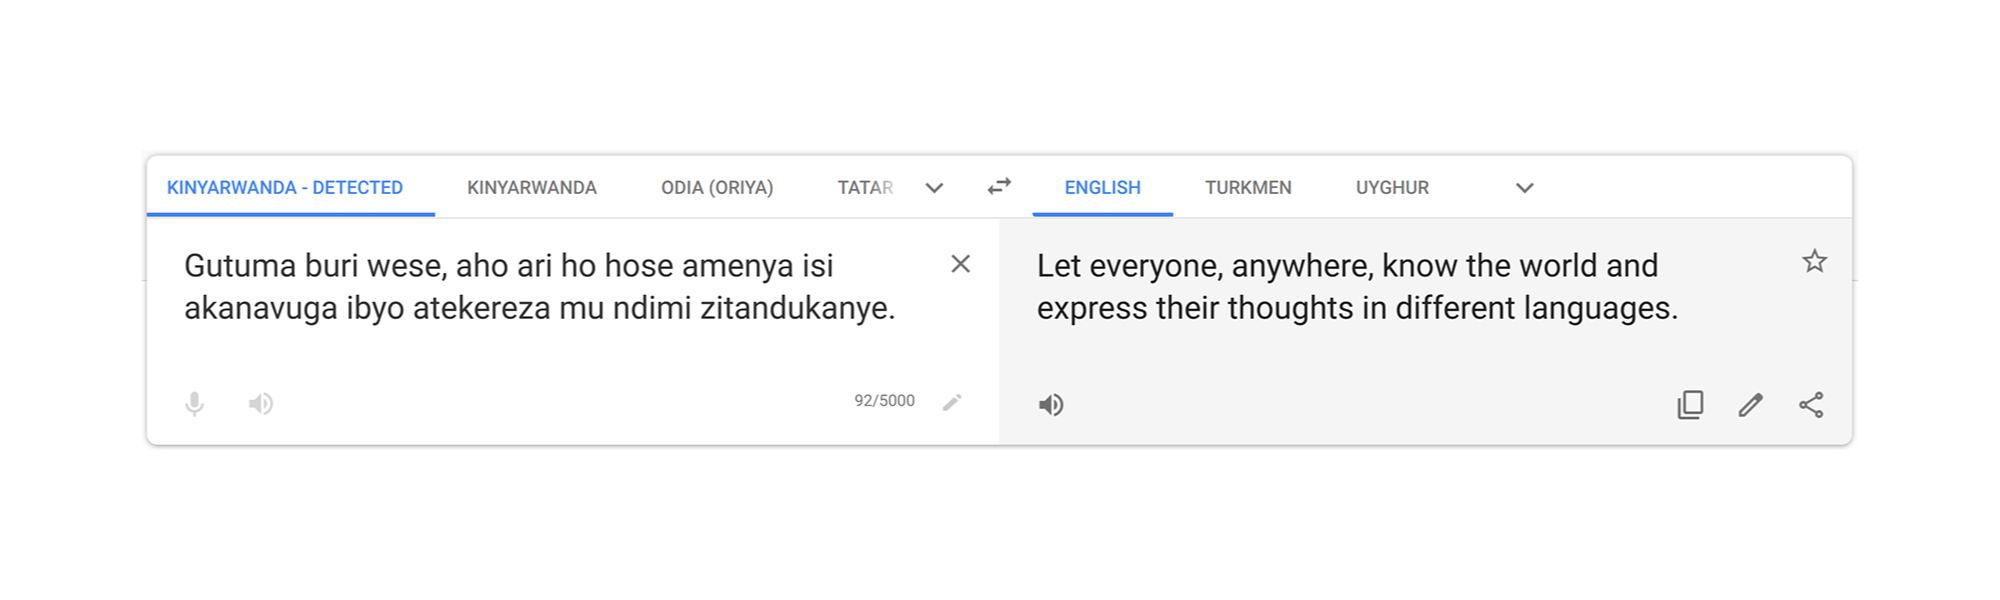 old google translate voice